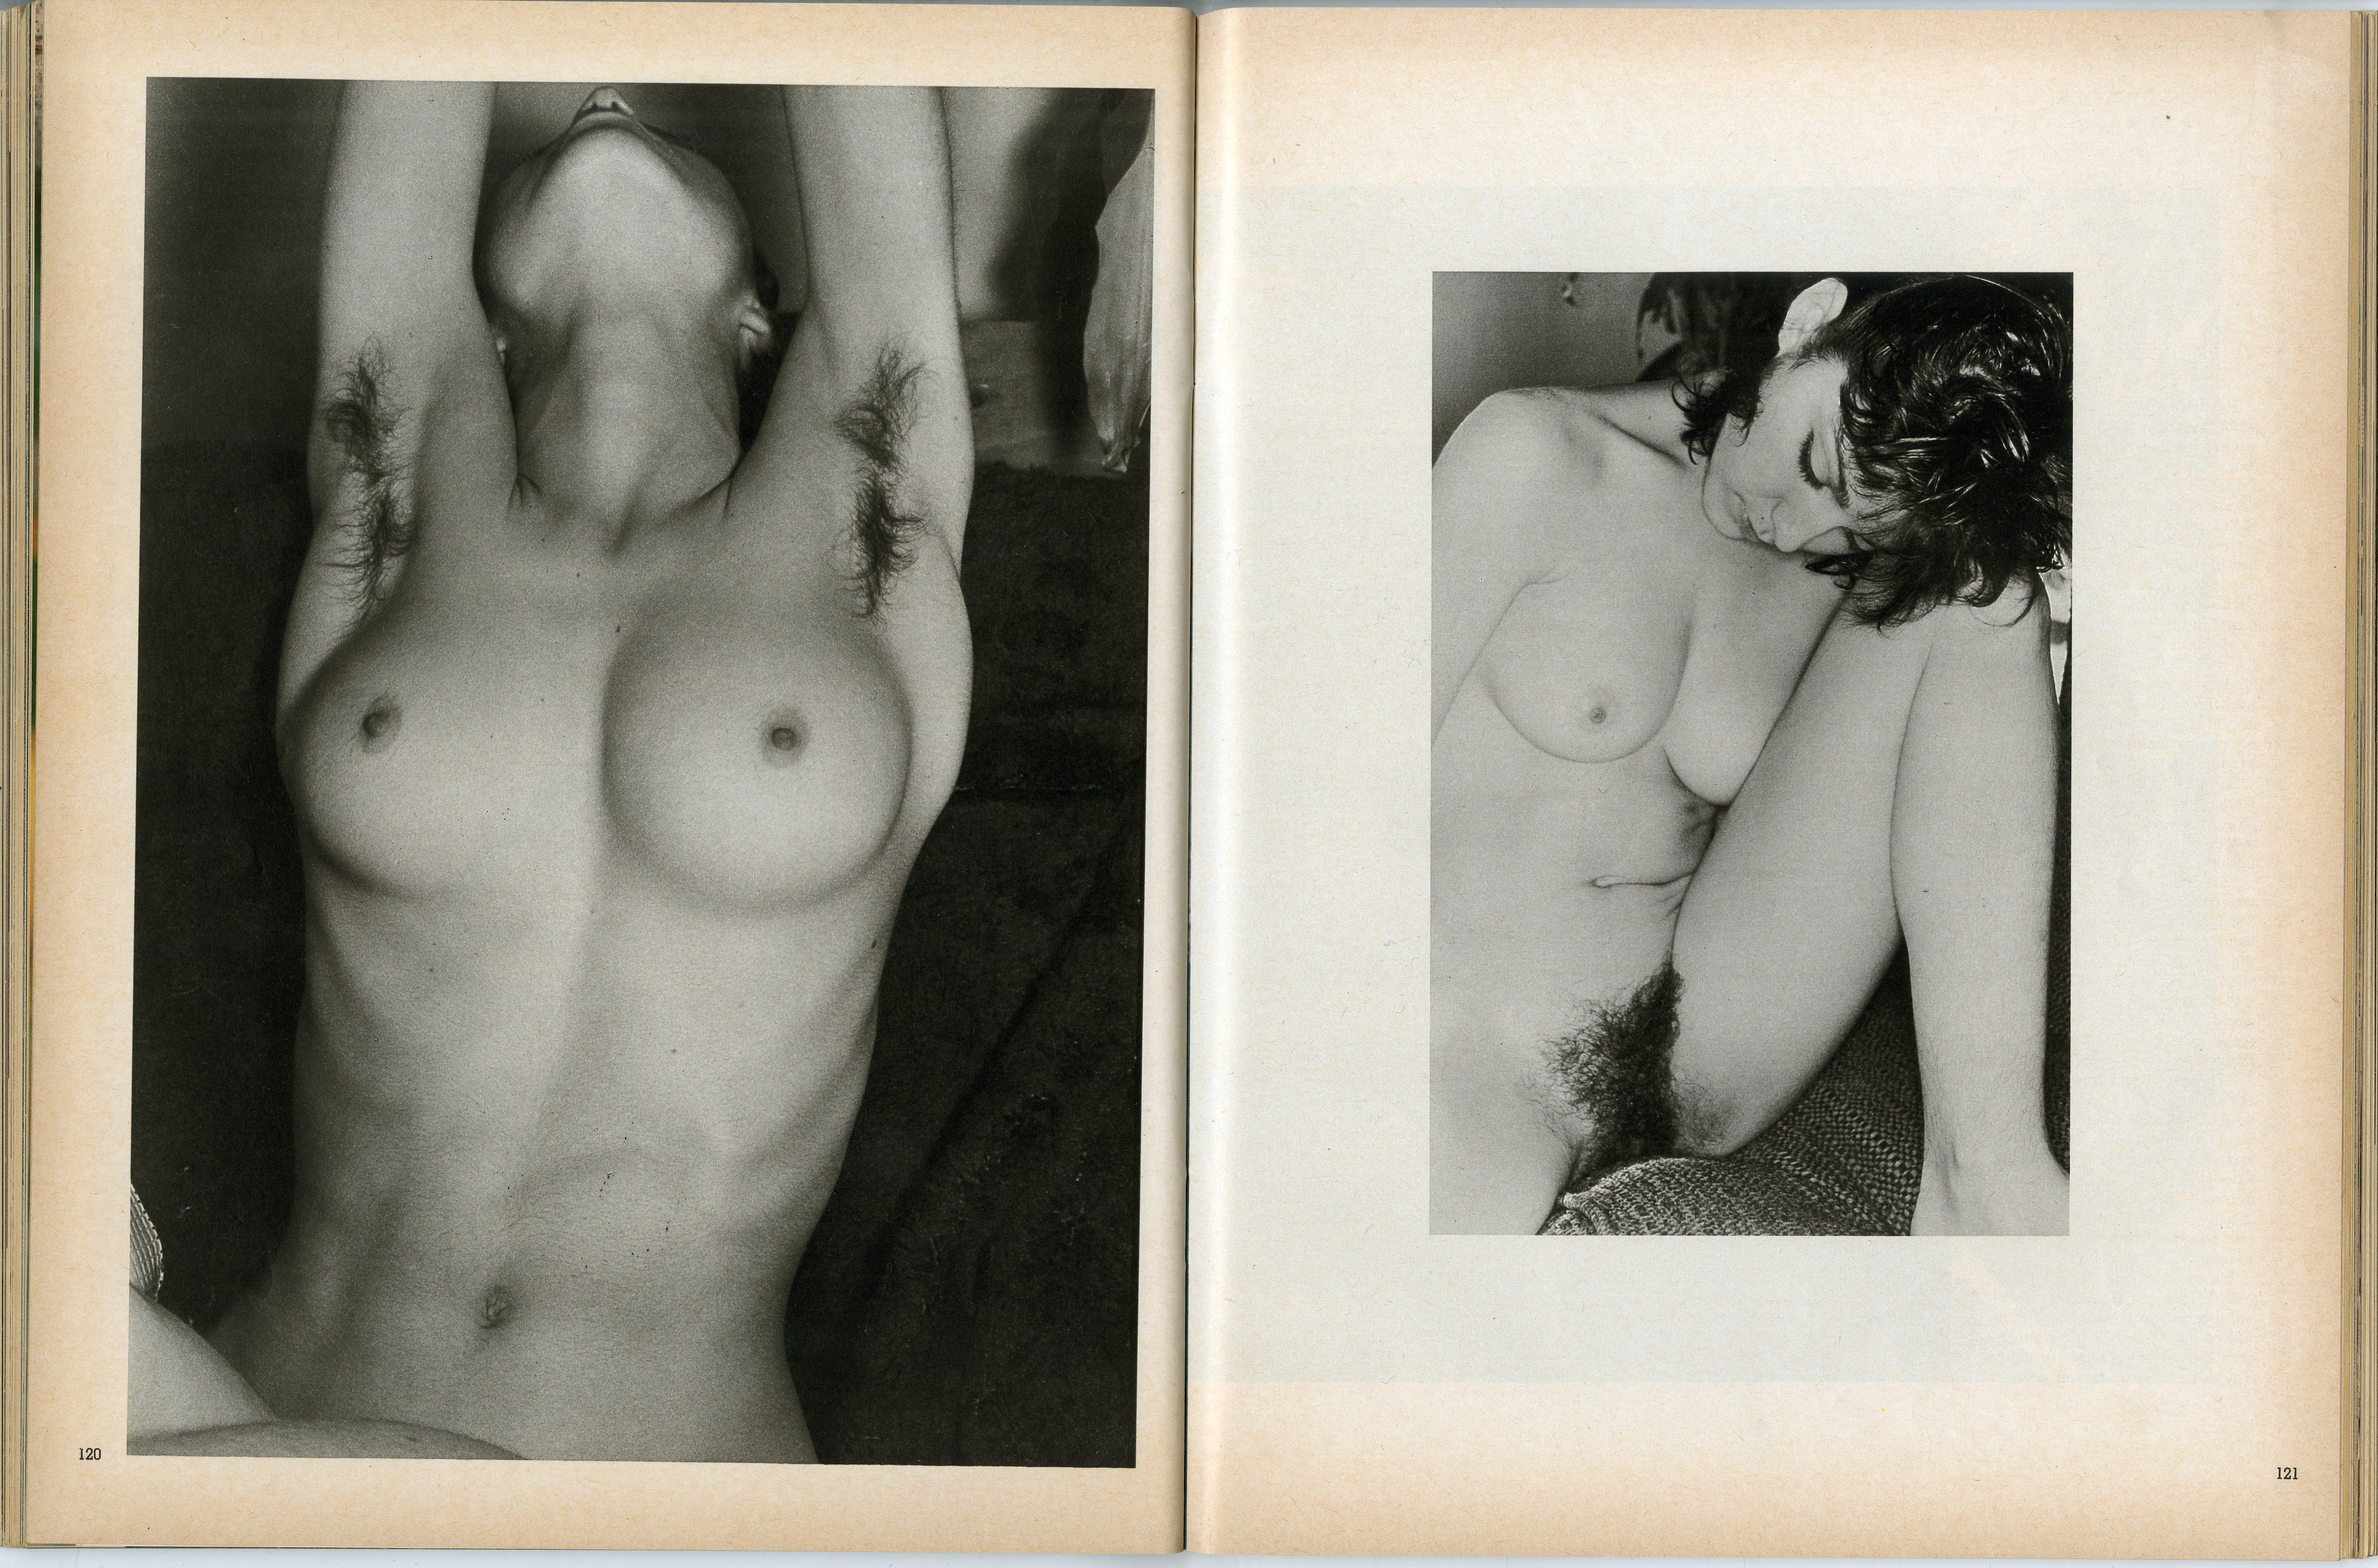 Madonna nude – old photos